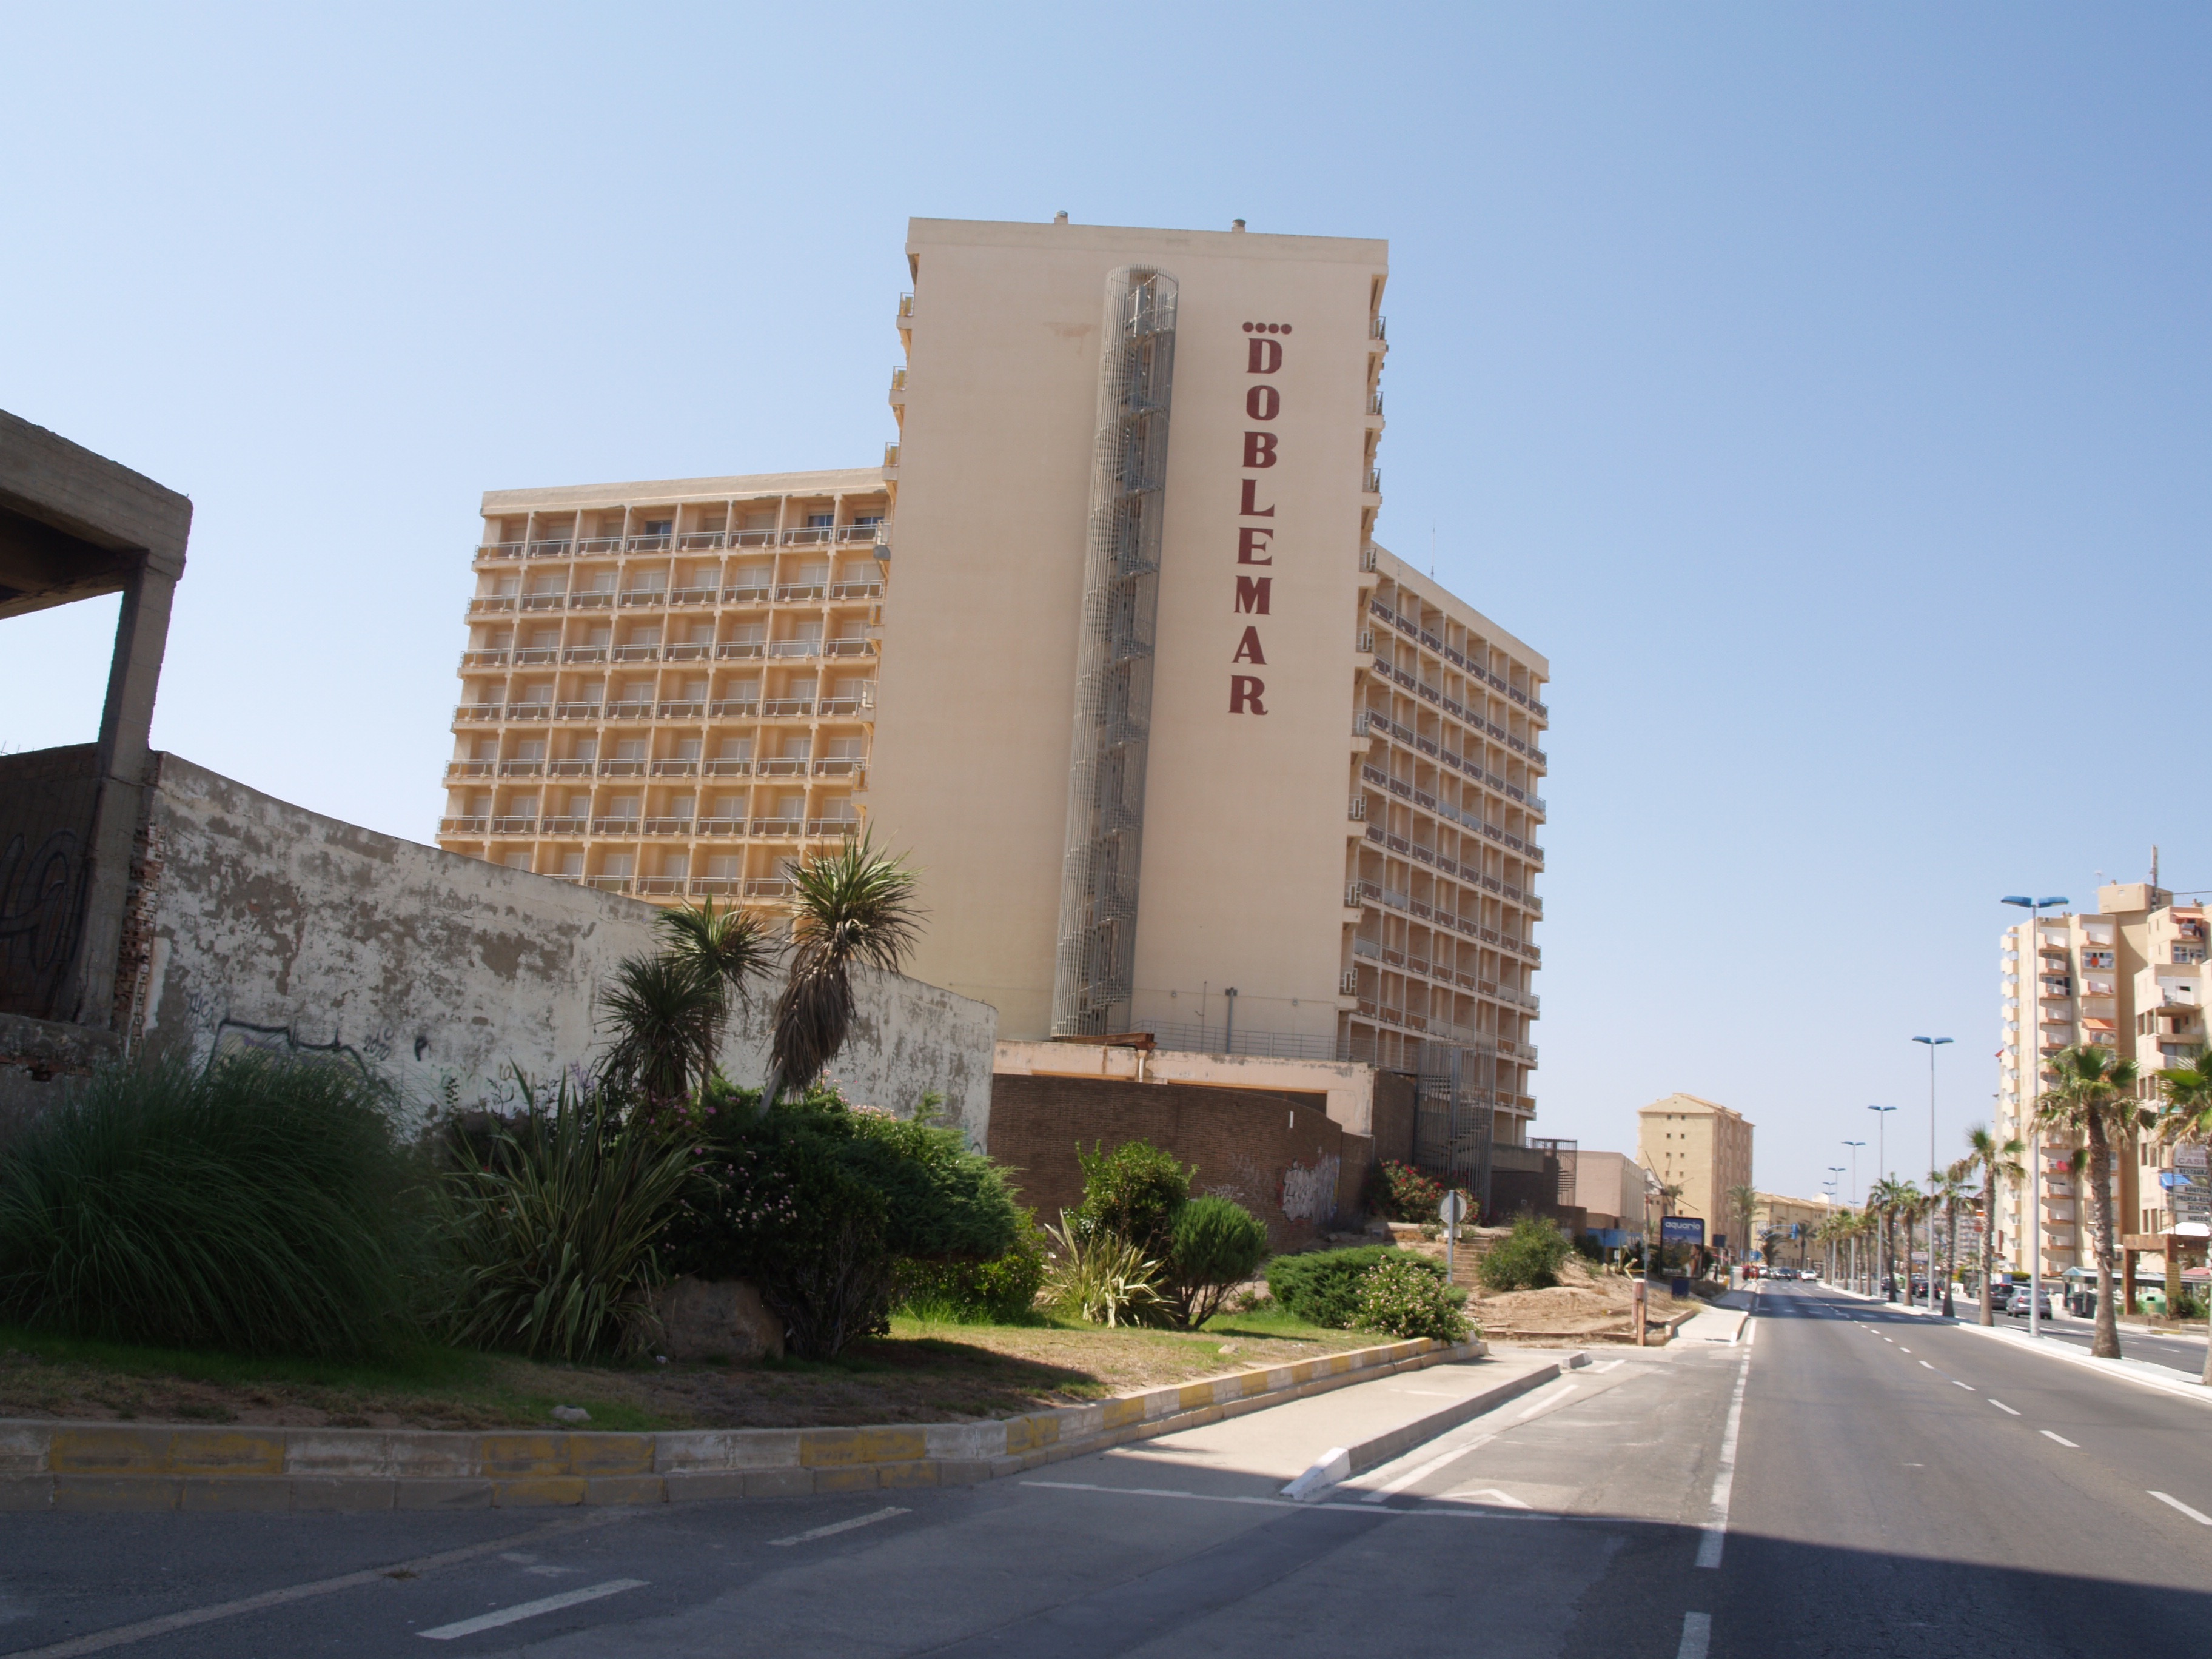 Hotel Doblemar, en La Manga del Mar Menor